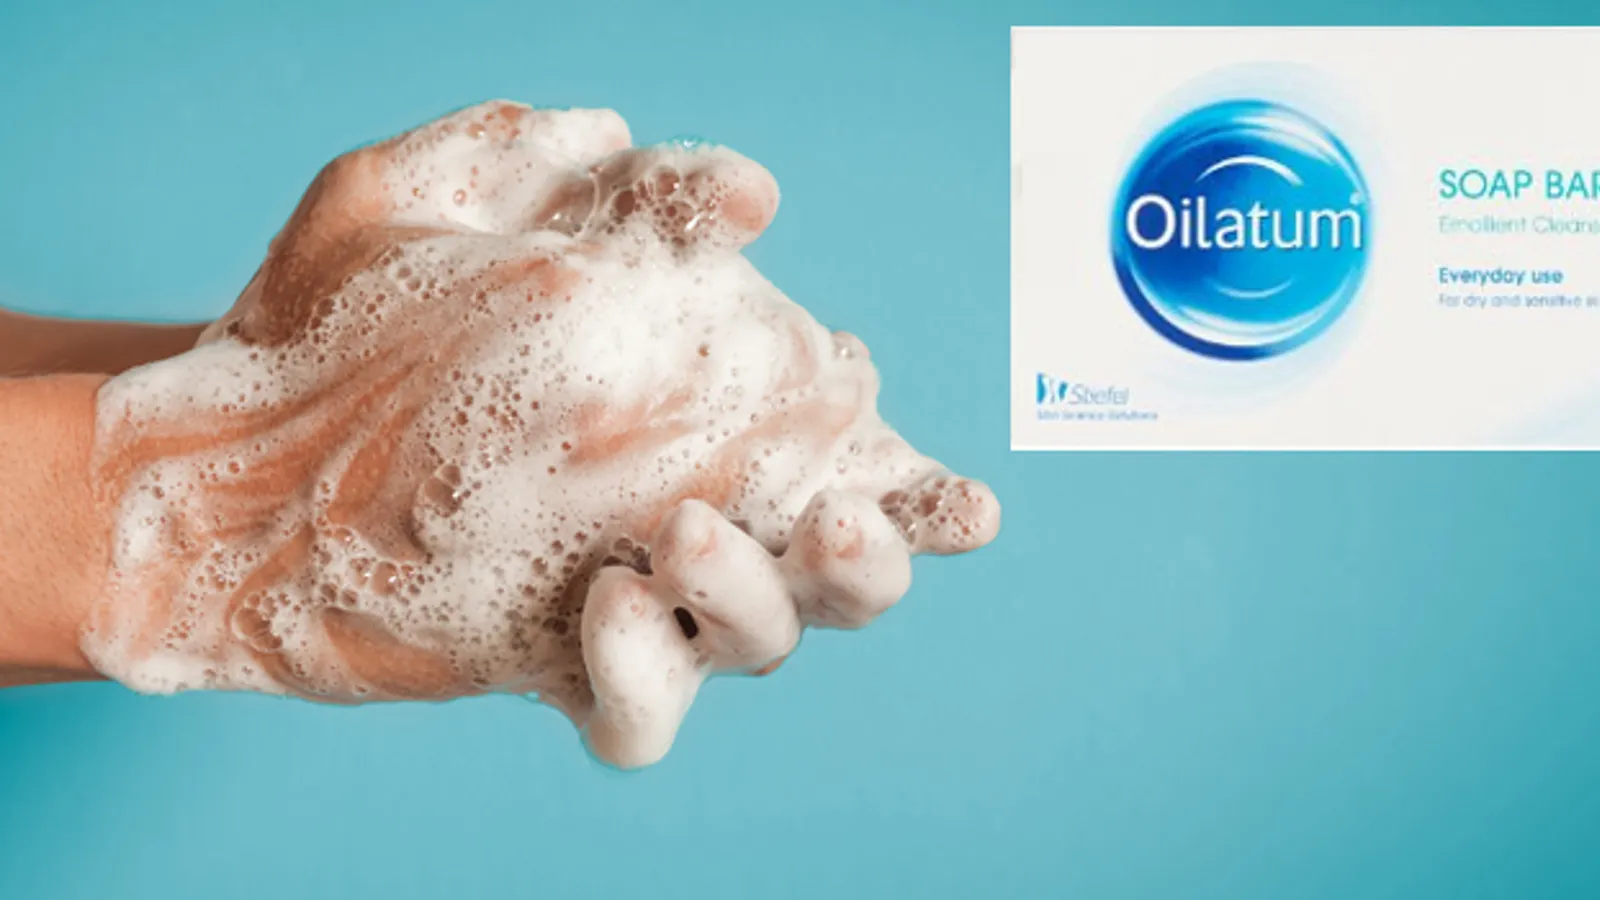 Oilatum Soap: Uses, Benefits and More | Weldricks Pharmacy